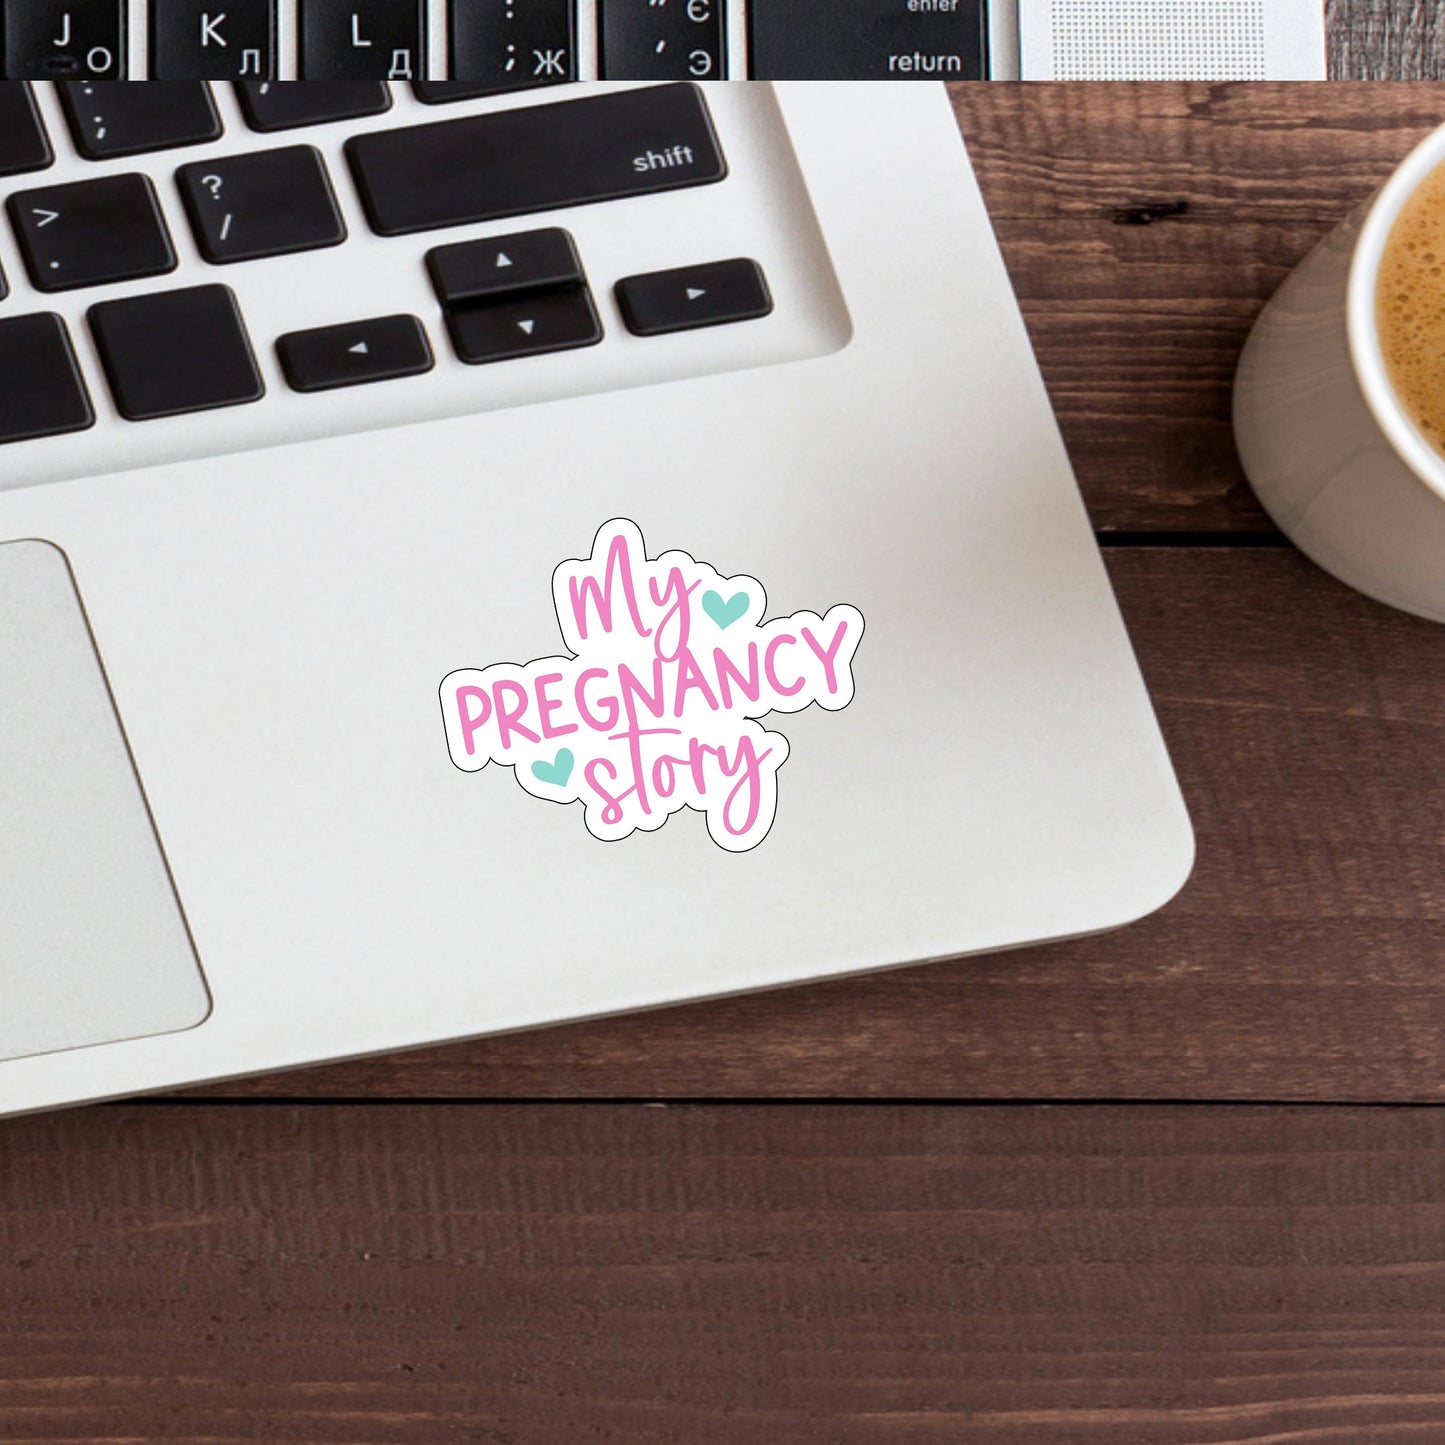 My pregnancy story  Sticker,  Vinyl sticker, laptop sticker, Tablet sticker